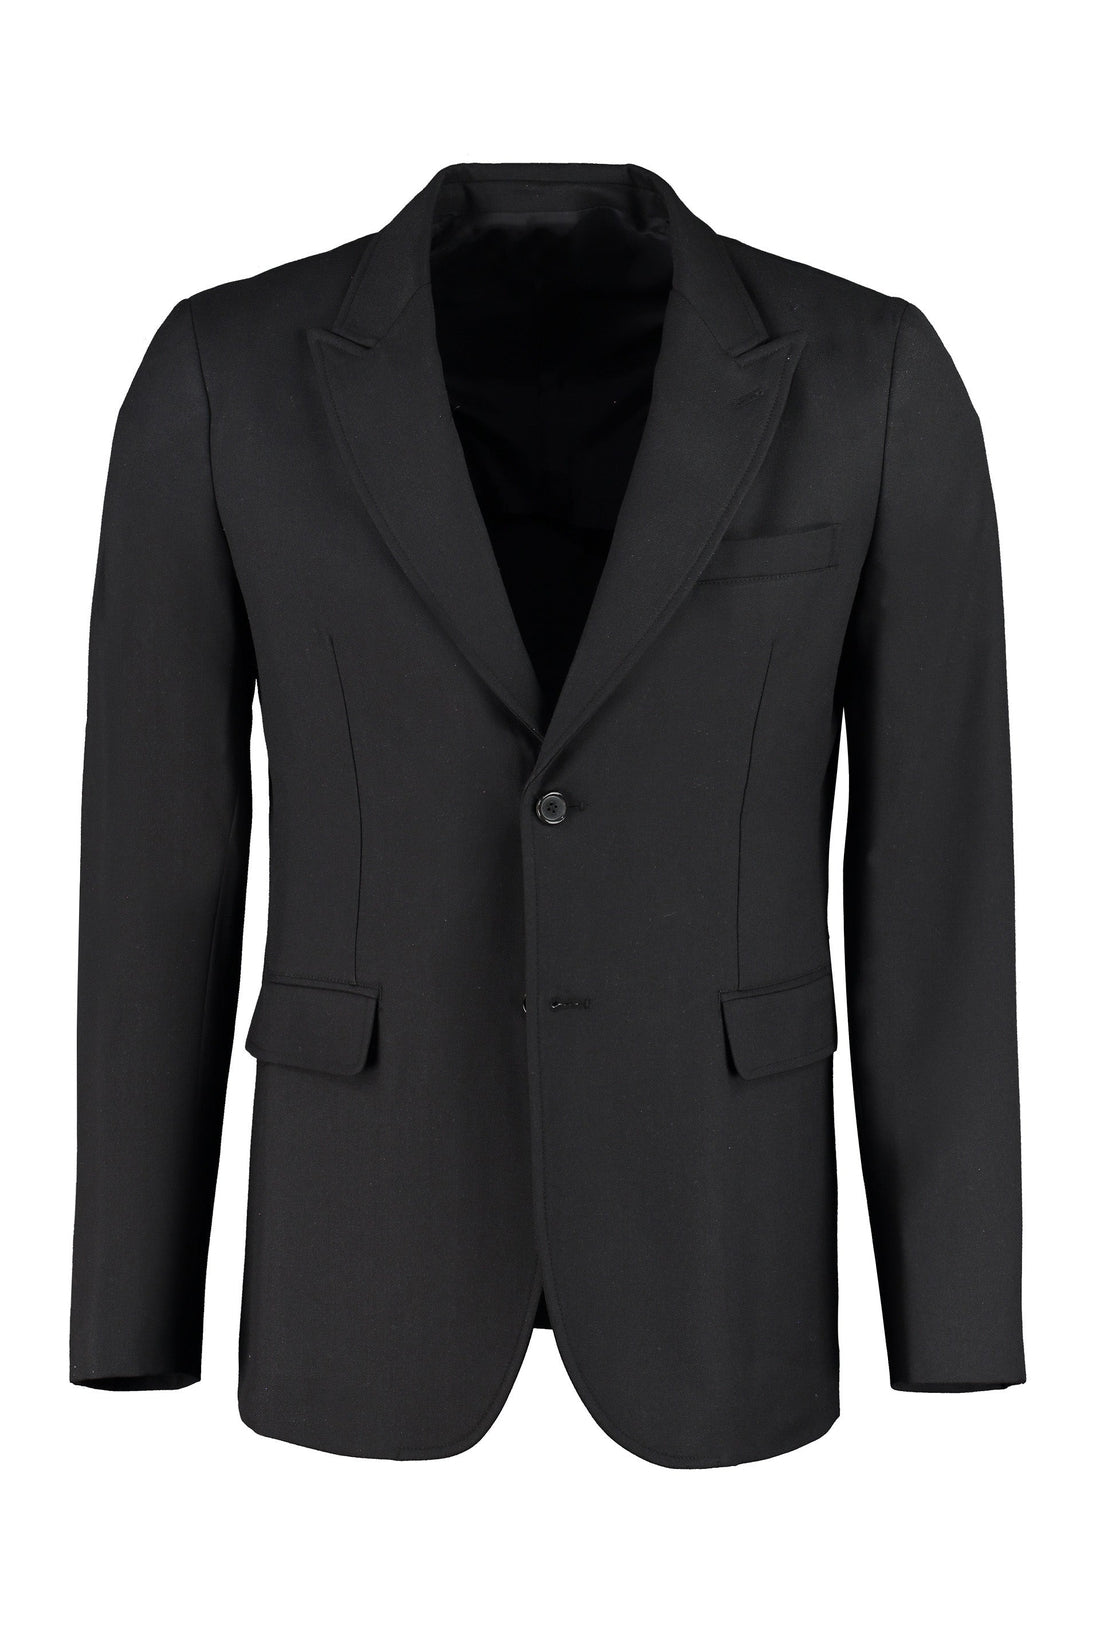 Comme des Garçons-OUTLET-SALE-Single-breasted wool jacket-ARCHIVIST